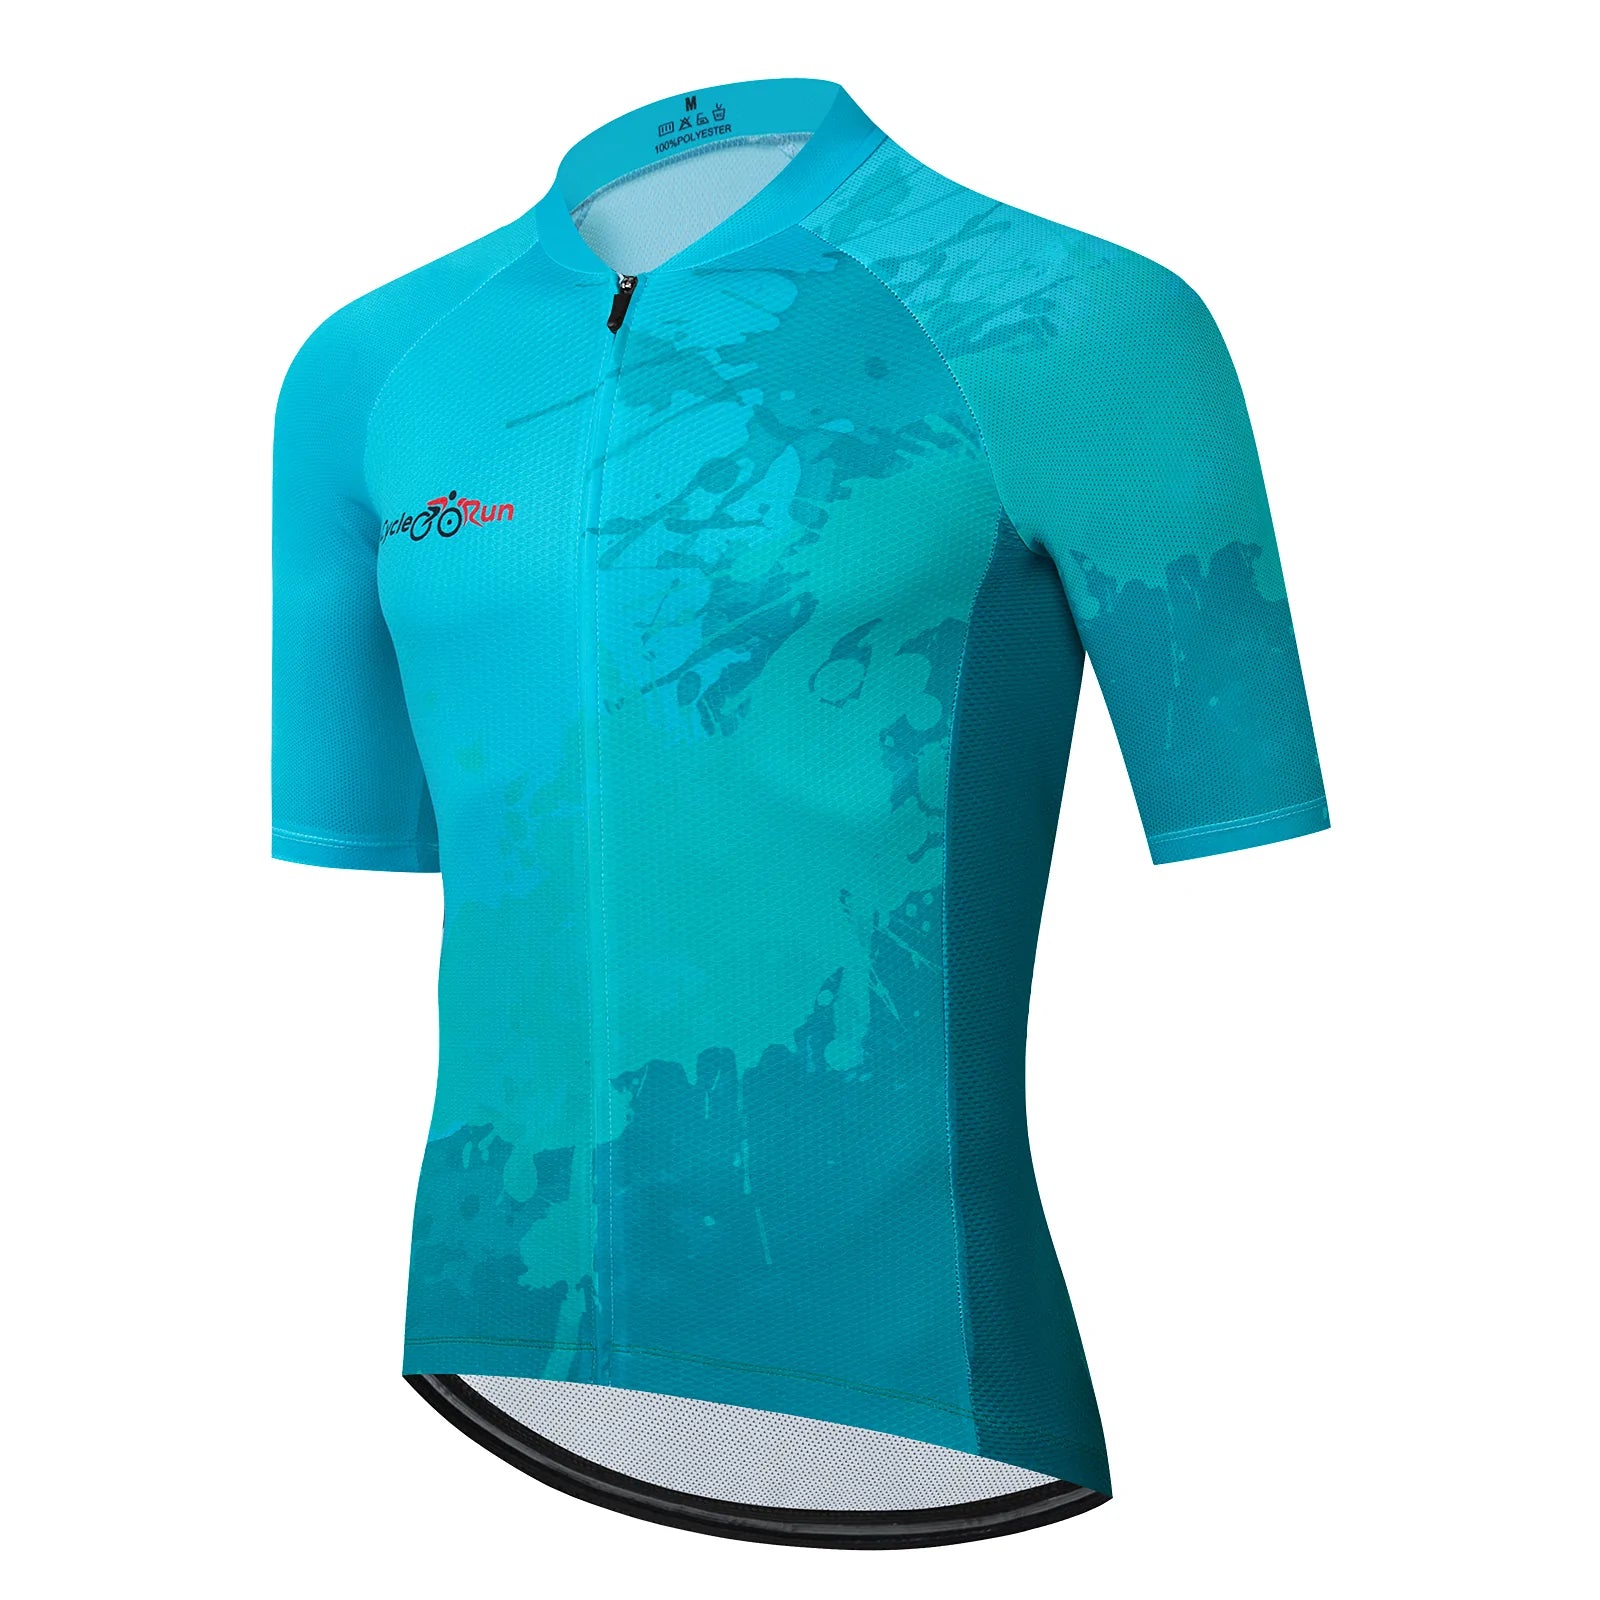 Light blue paint splash cycling jersey for women